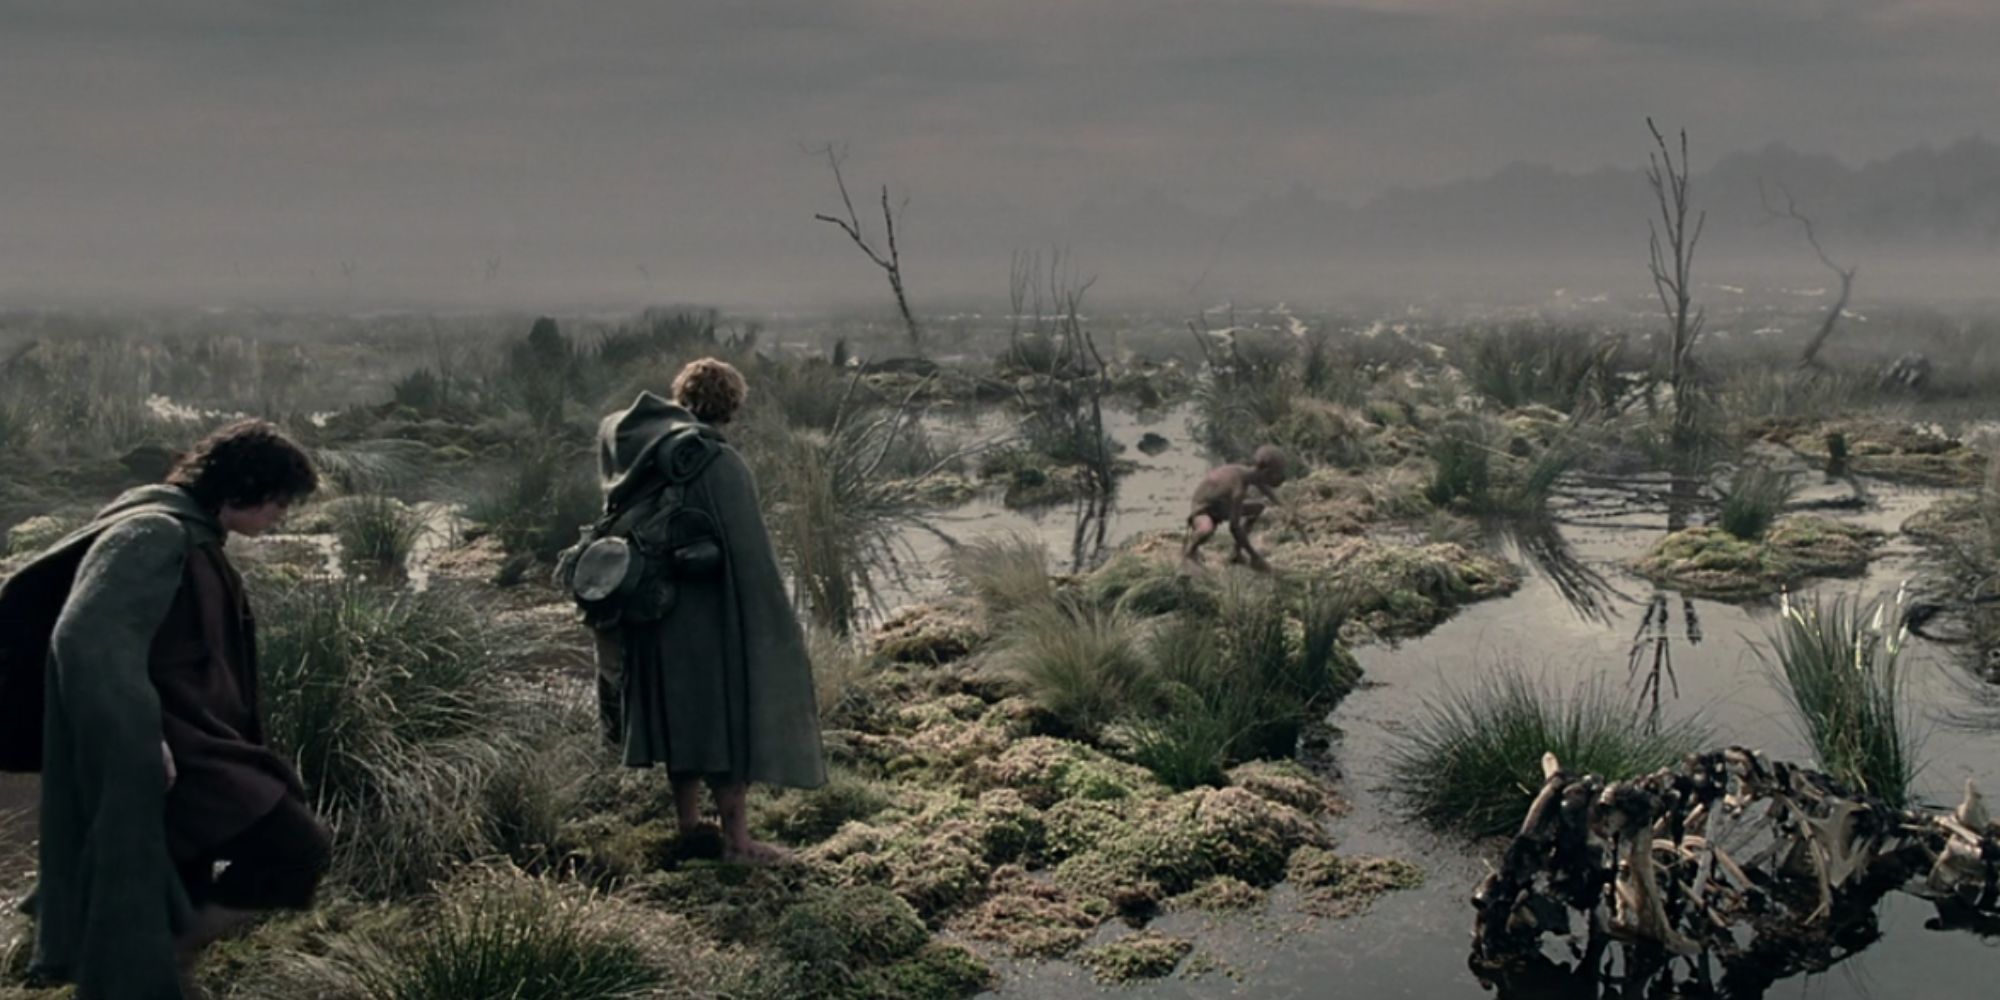 Gollum lleva a Frodo y Sam a través de Dead Marshes